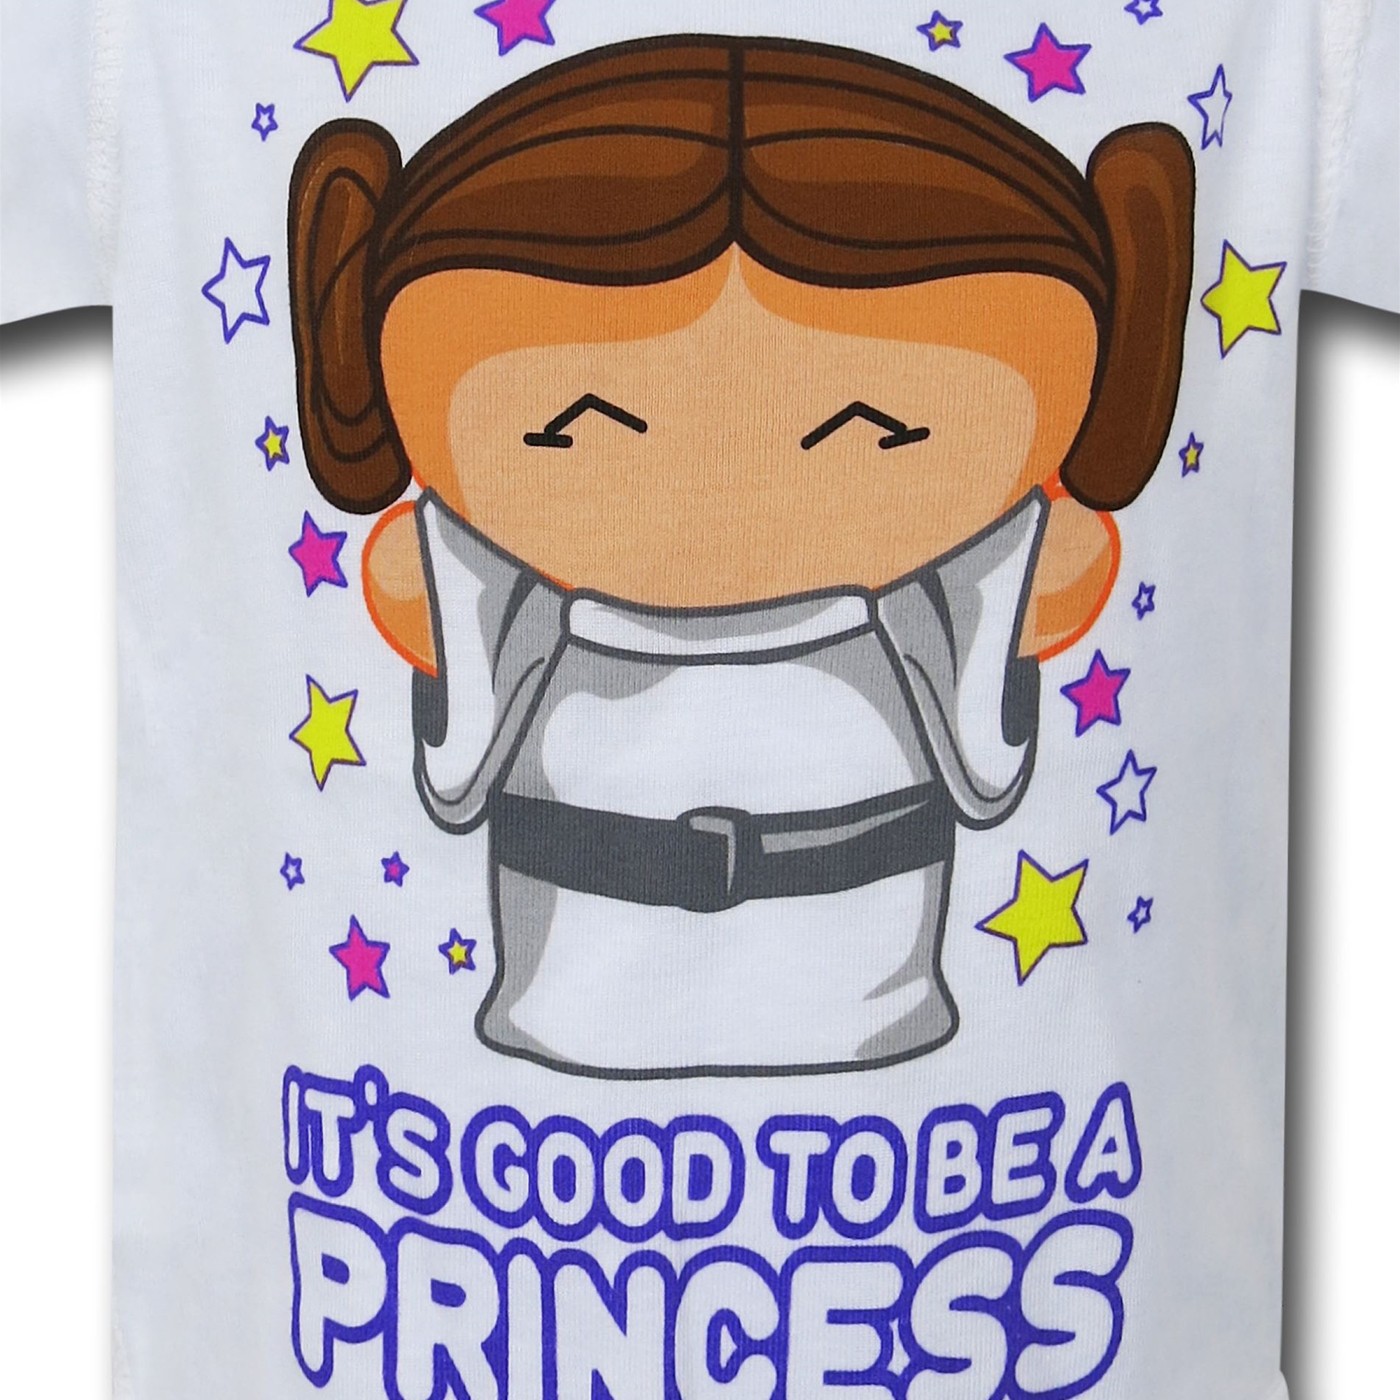 Star Wars Leia Princess Infant Snapsuit